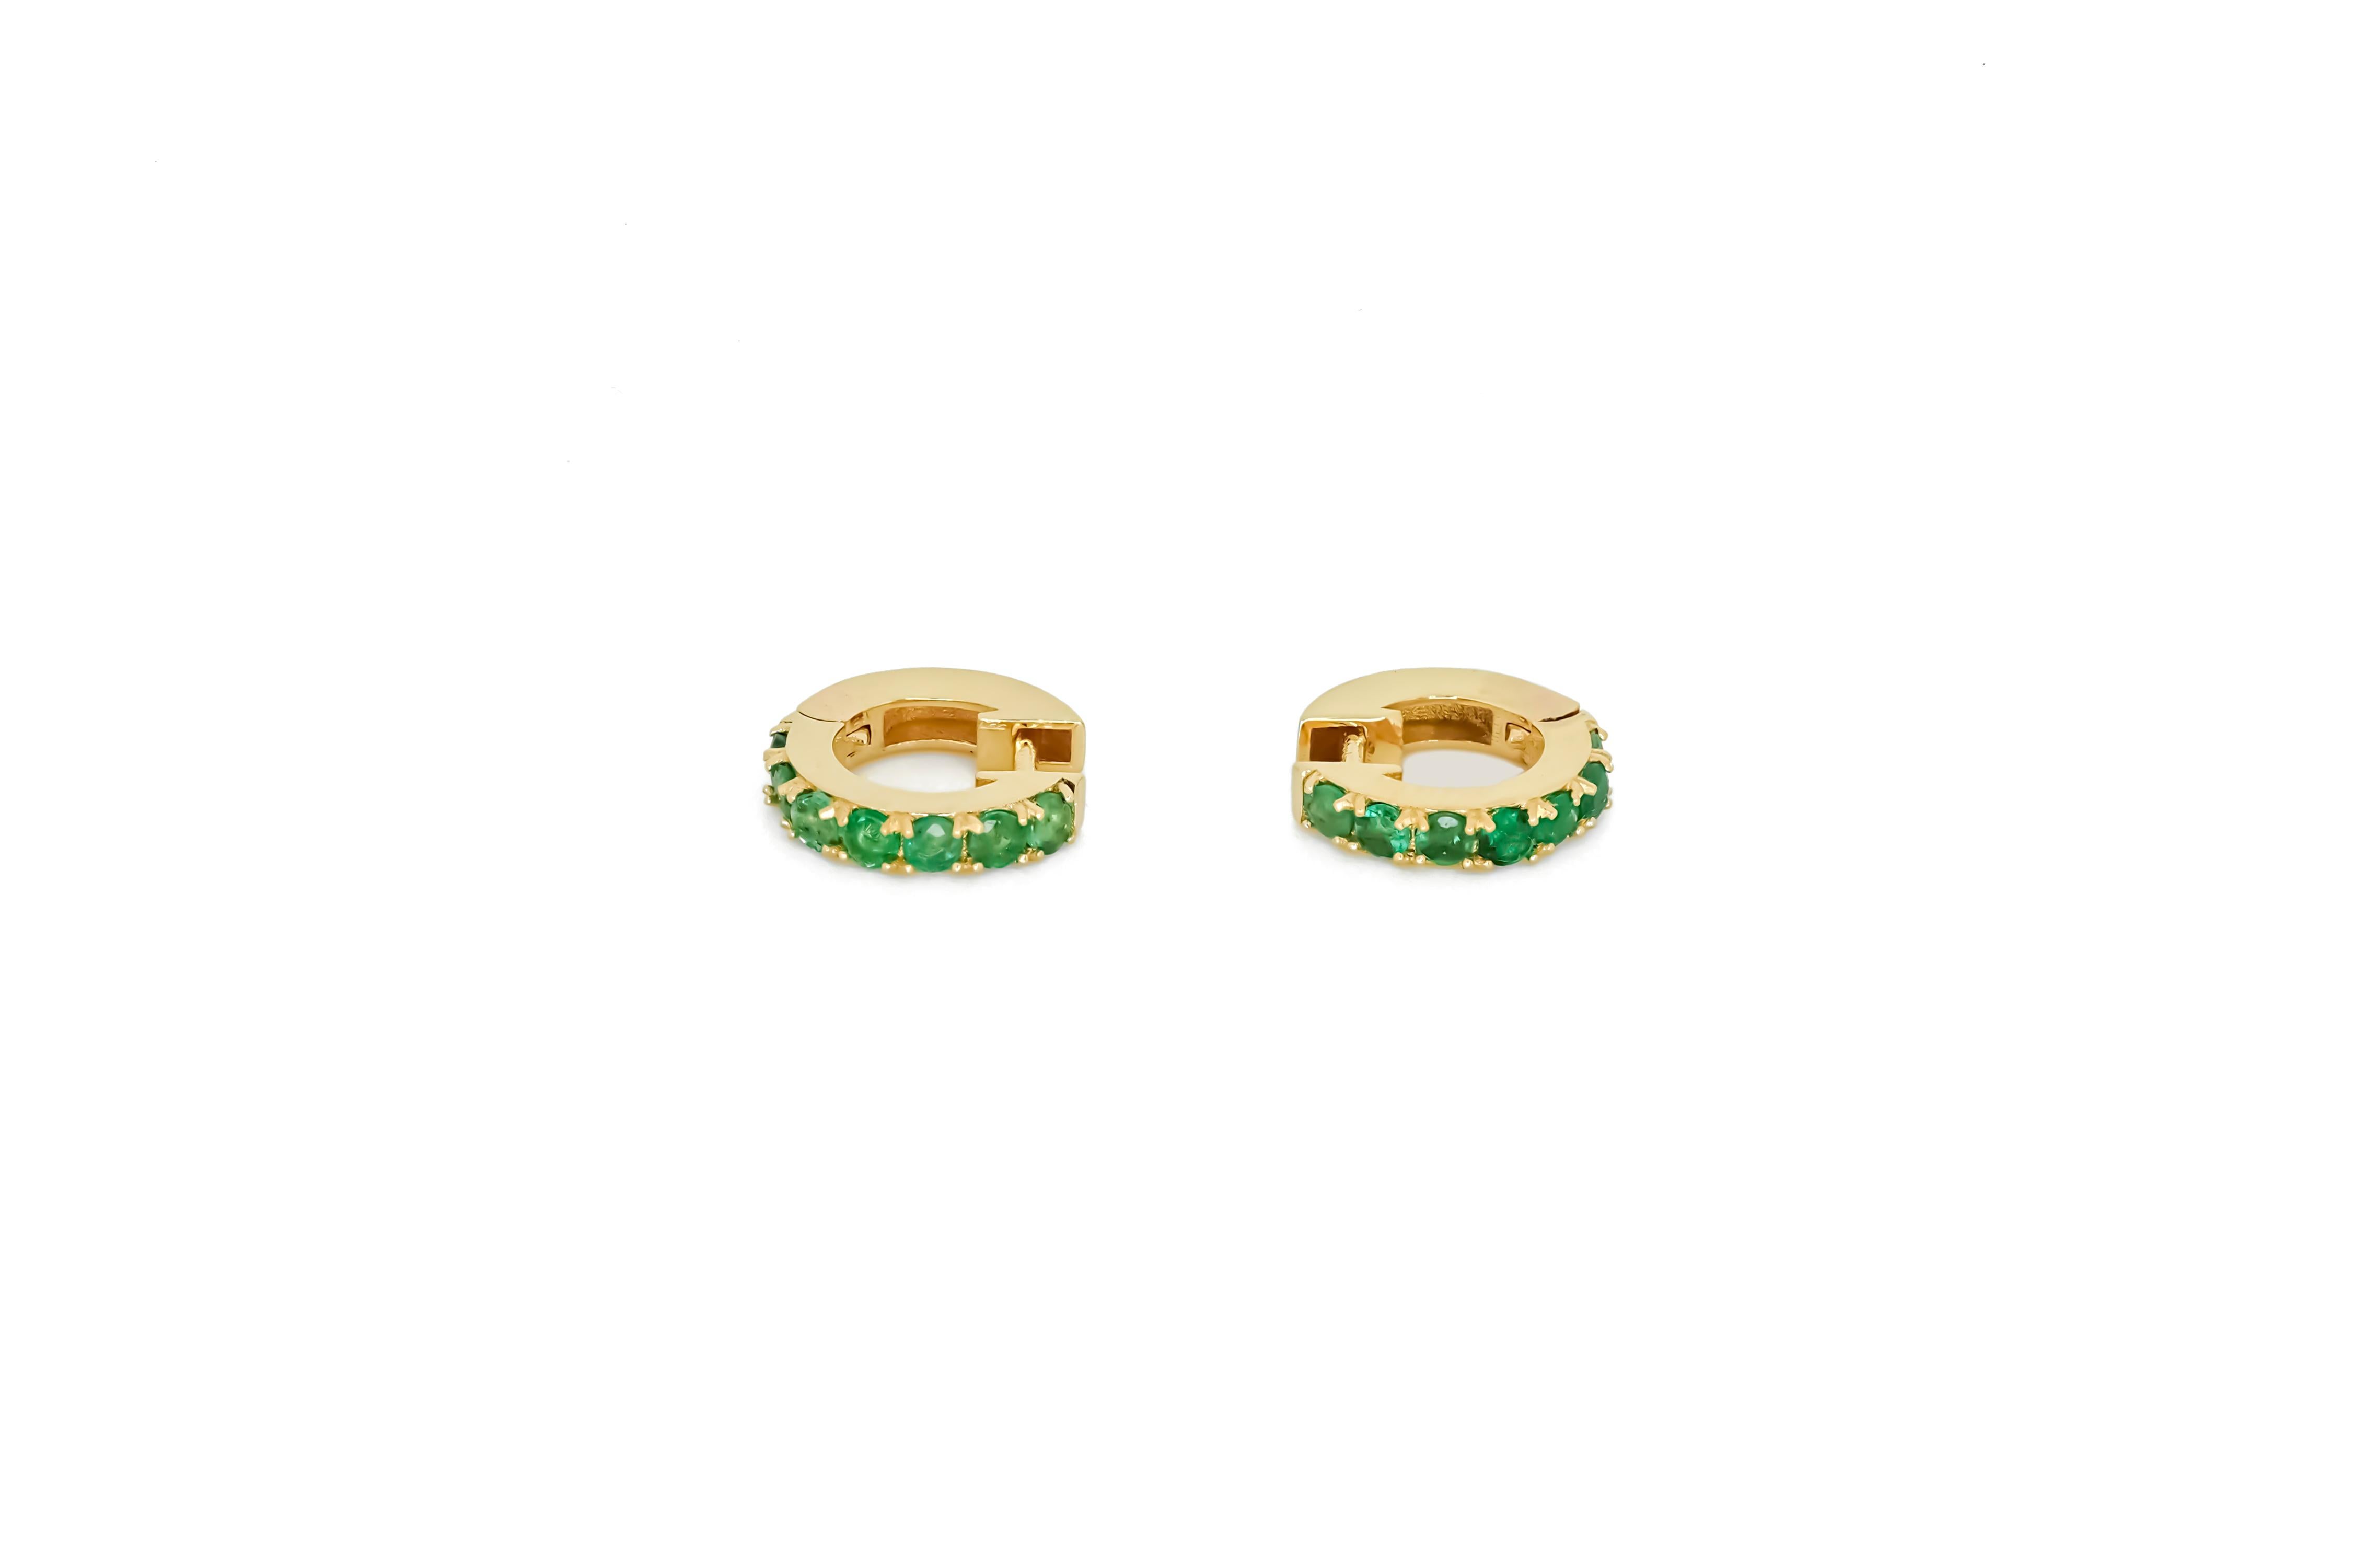 Hoop Earrings with Emeralds. Huggy hoop emerald earrings in 14 Karat Gold

Metal: 14kt solid gold
Earring size:
The Inner diameter of Earrings: 10MM
The Outer diameter of Earrings: 12MM
Weight: 2.2. g.

Gemstones:
Emeralds: 14 piece, round cut, 